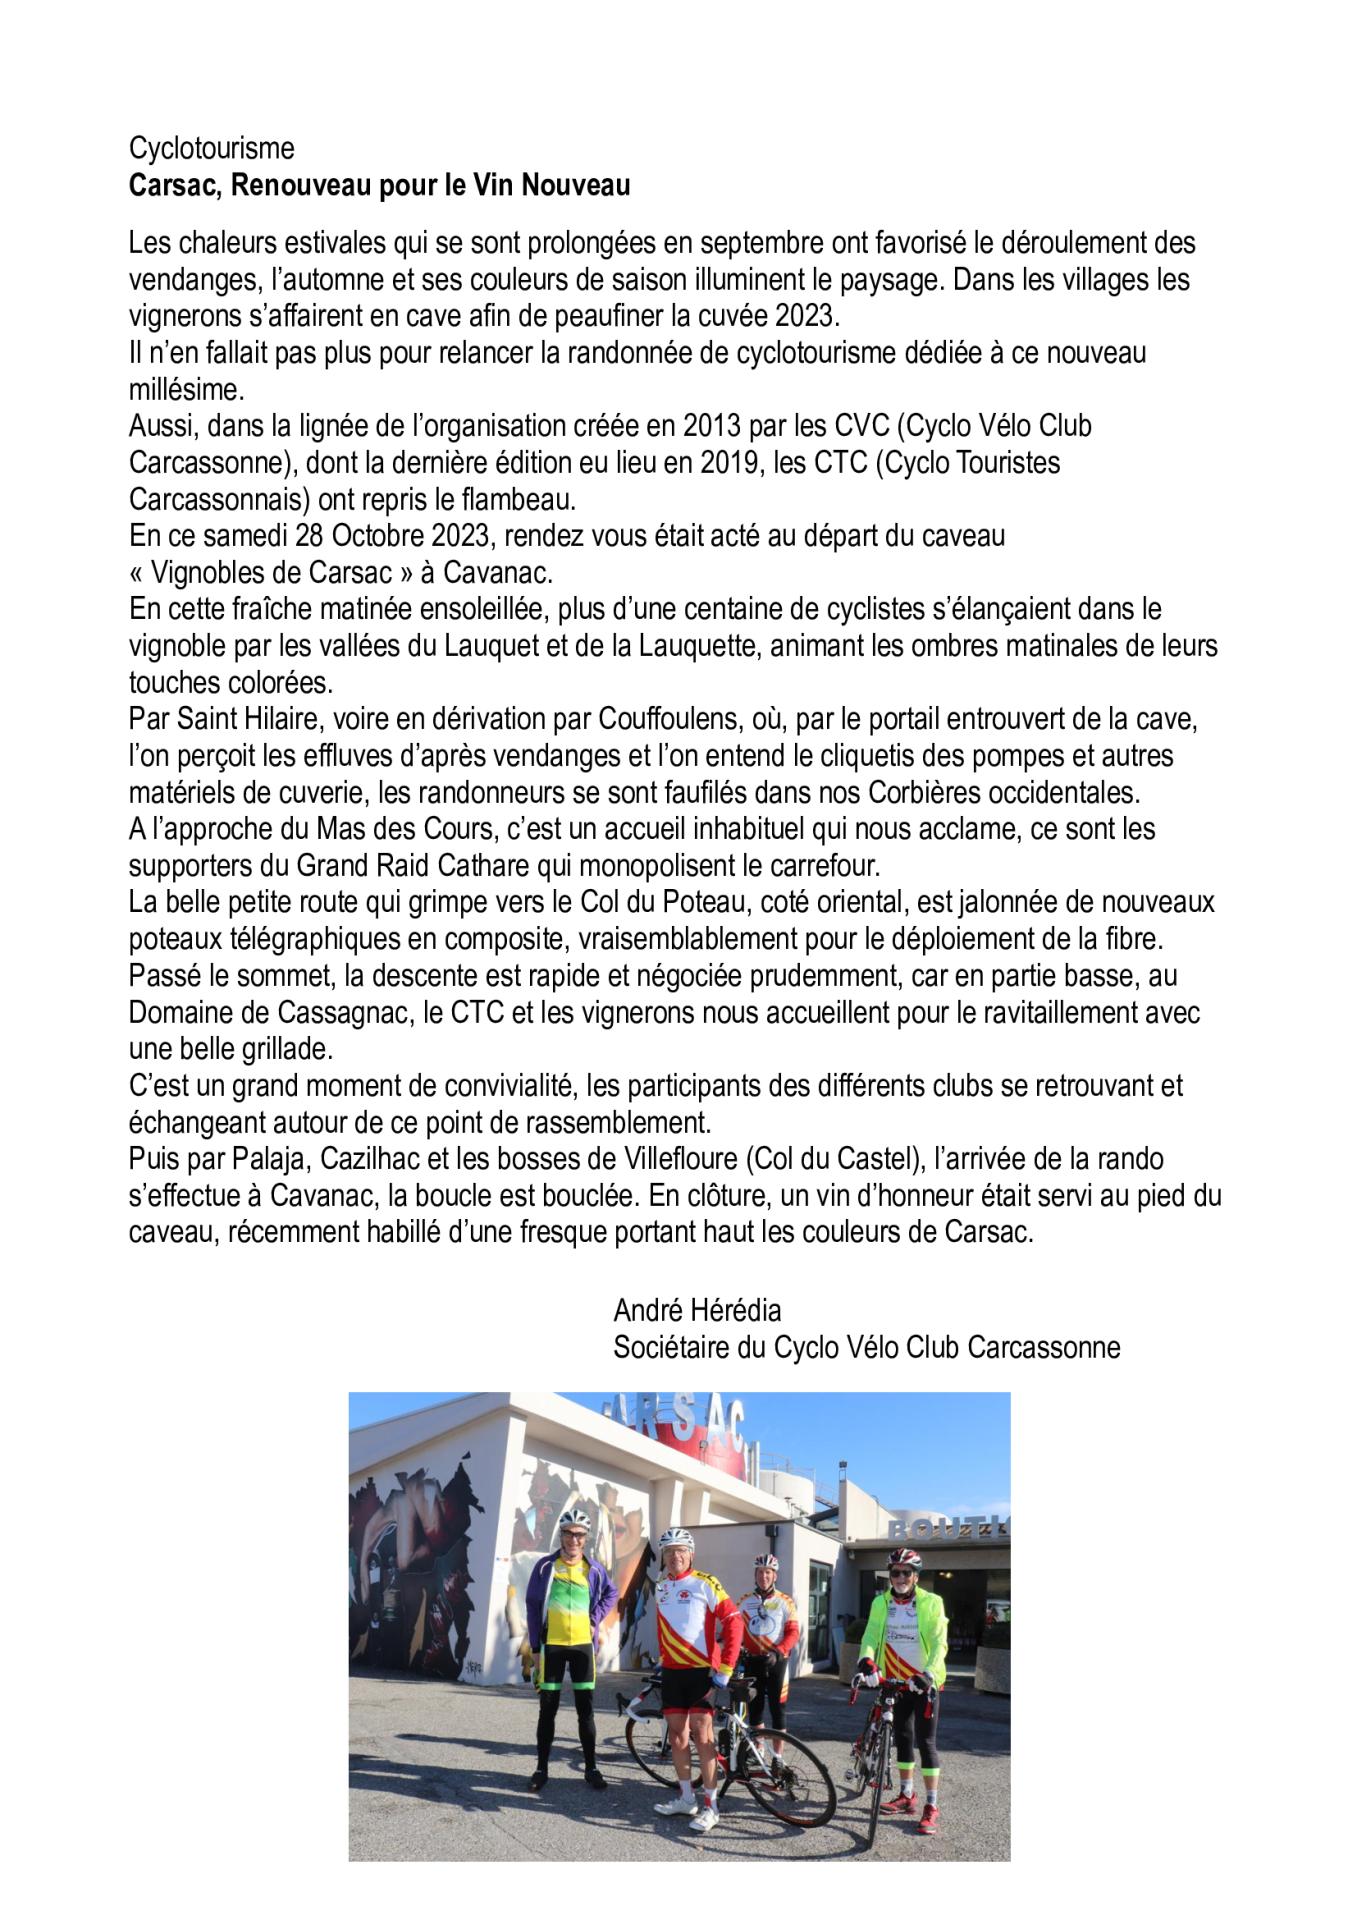 Cyclotourisme ctc carsac 2023